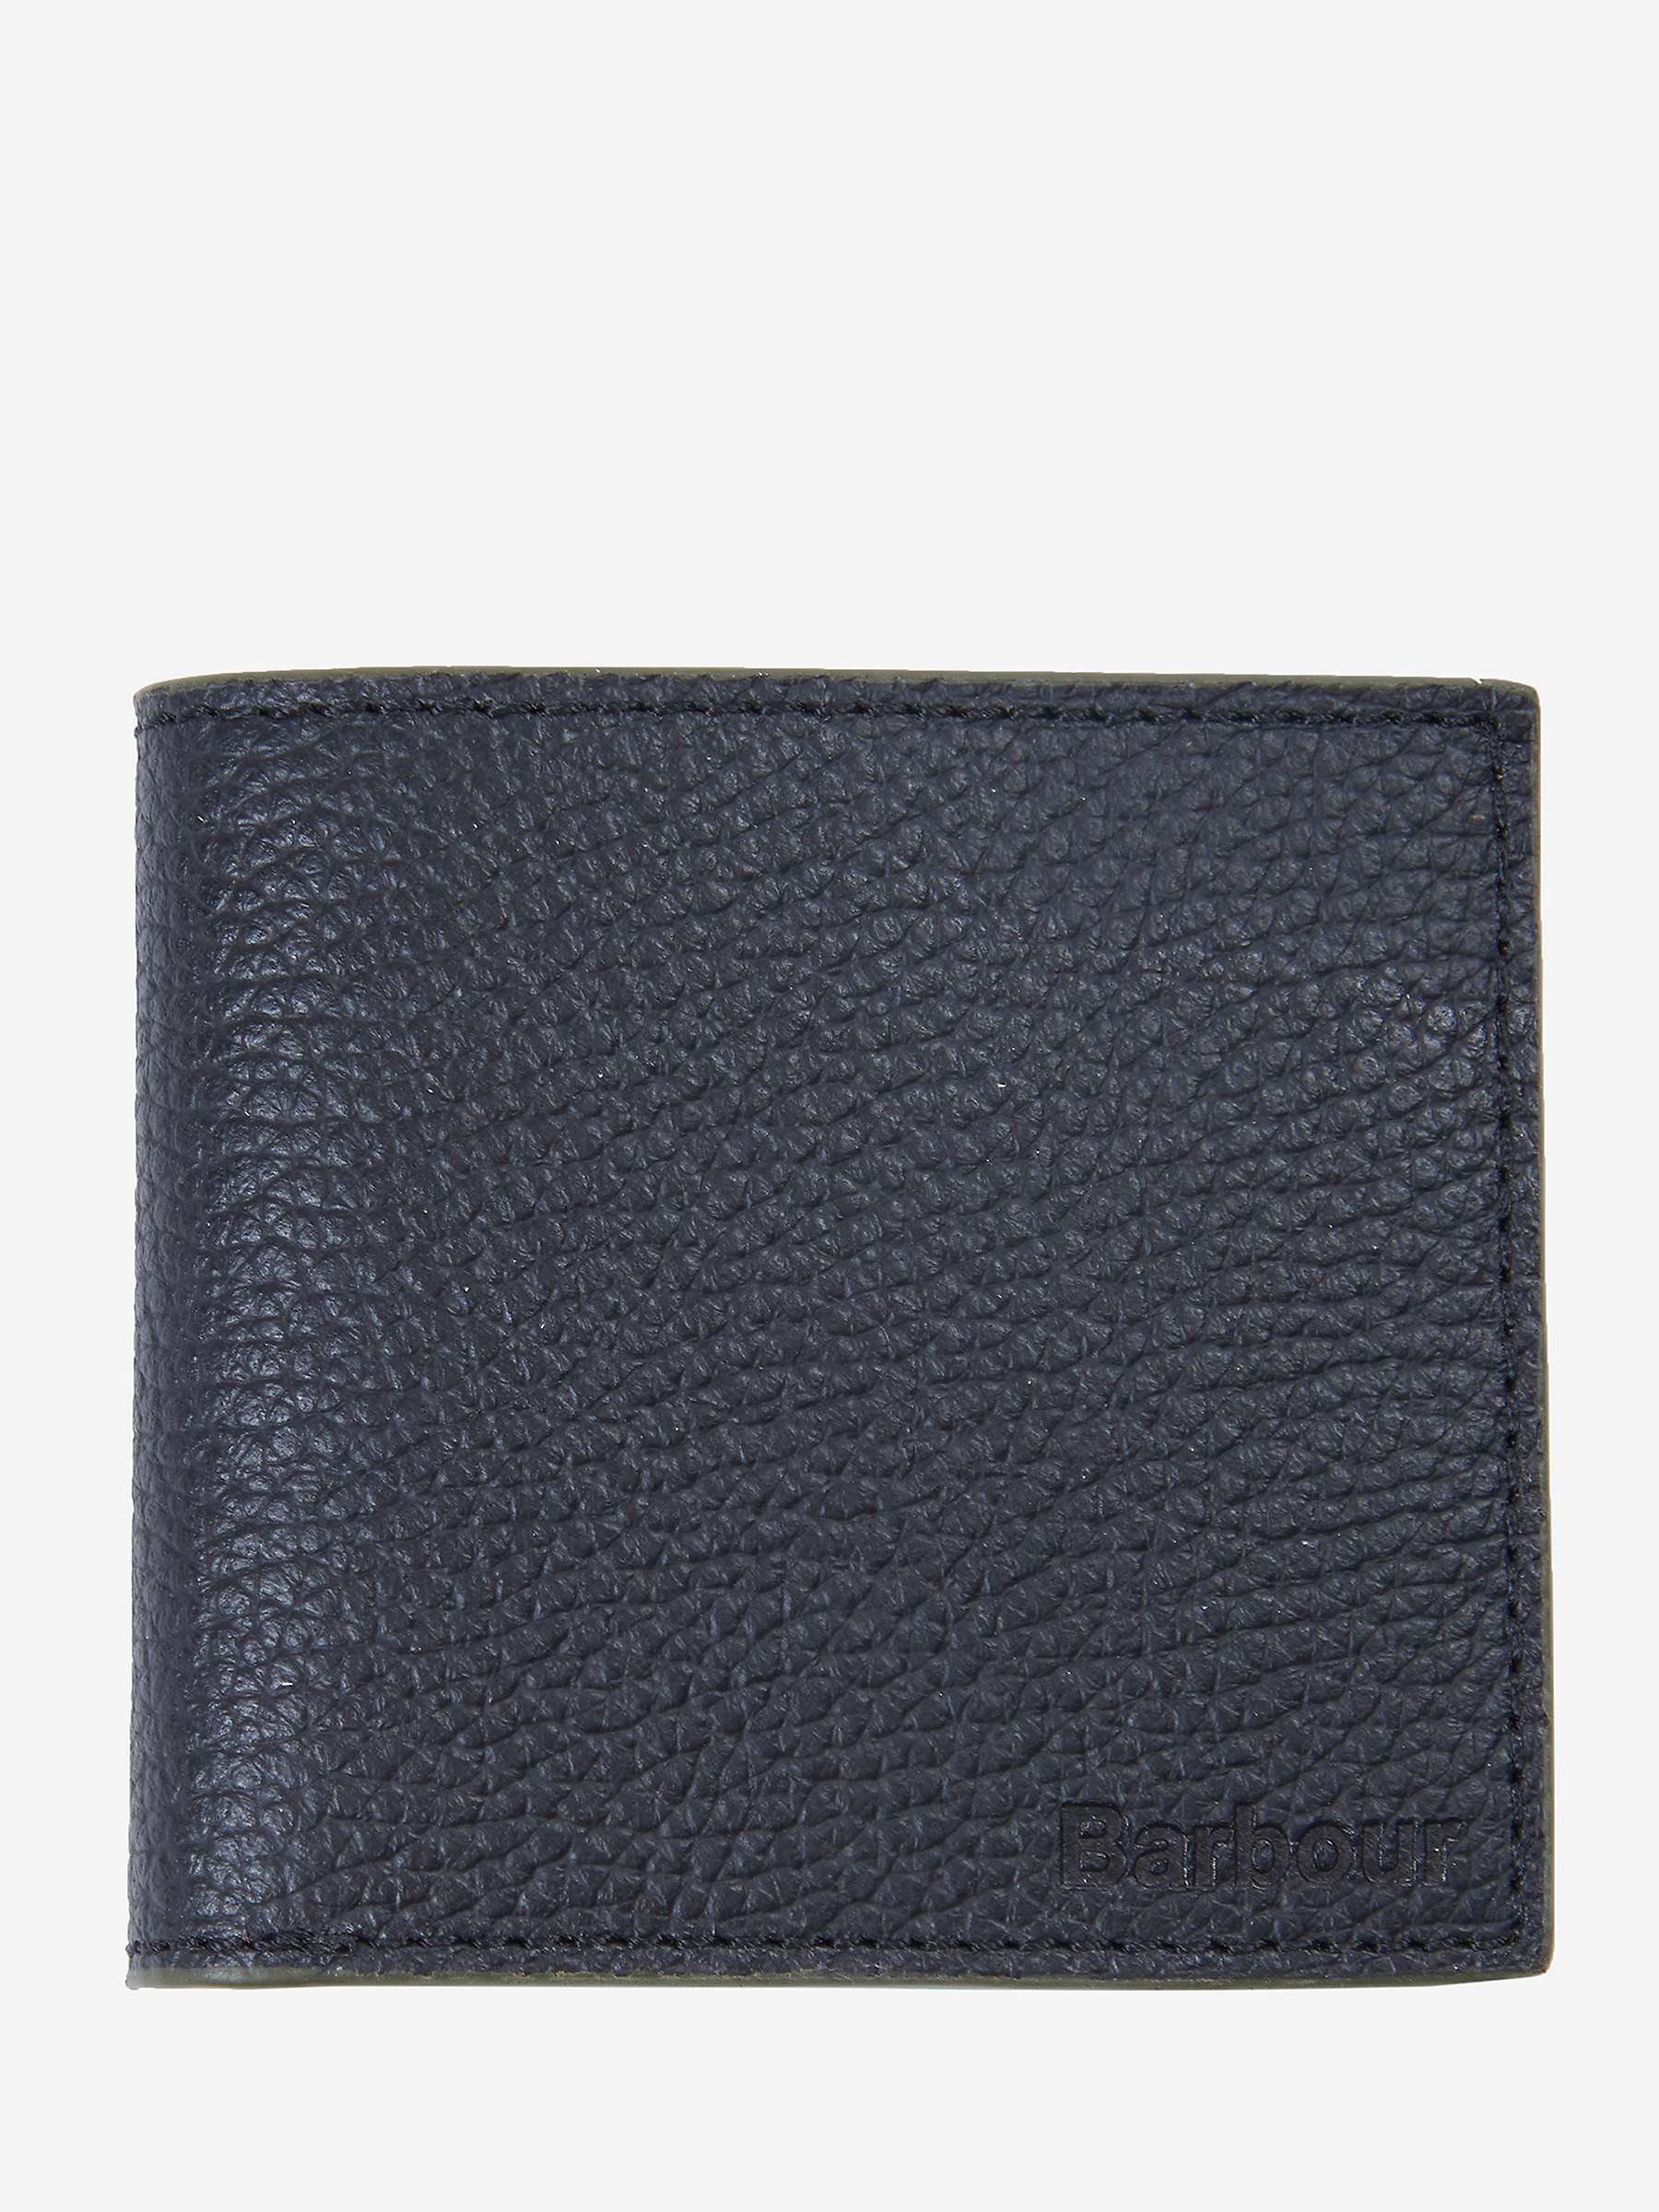 Barbour Bifold Grain Leather Wallet, Black at John Lewis & Partners